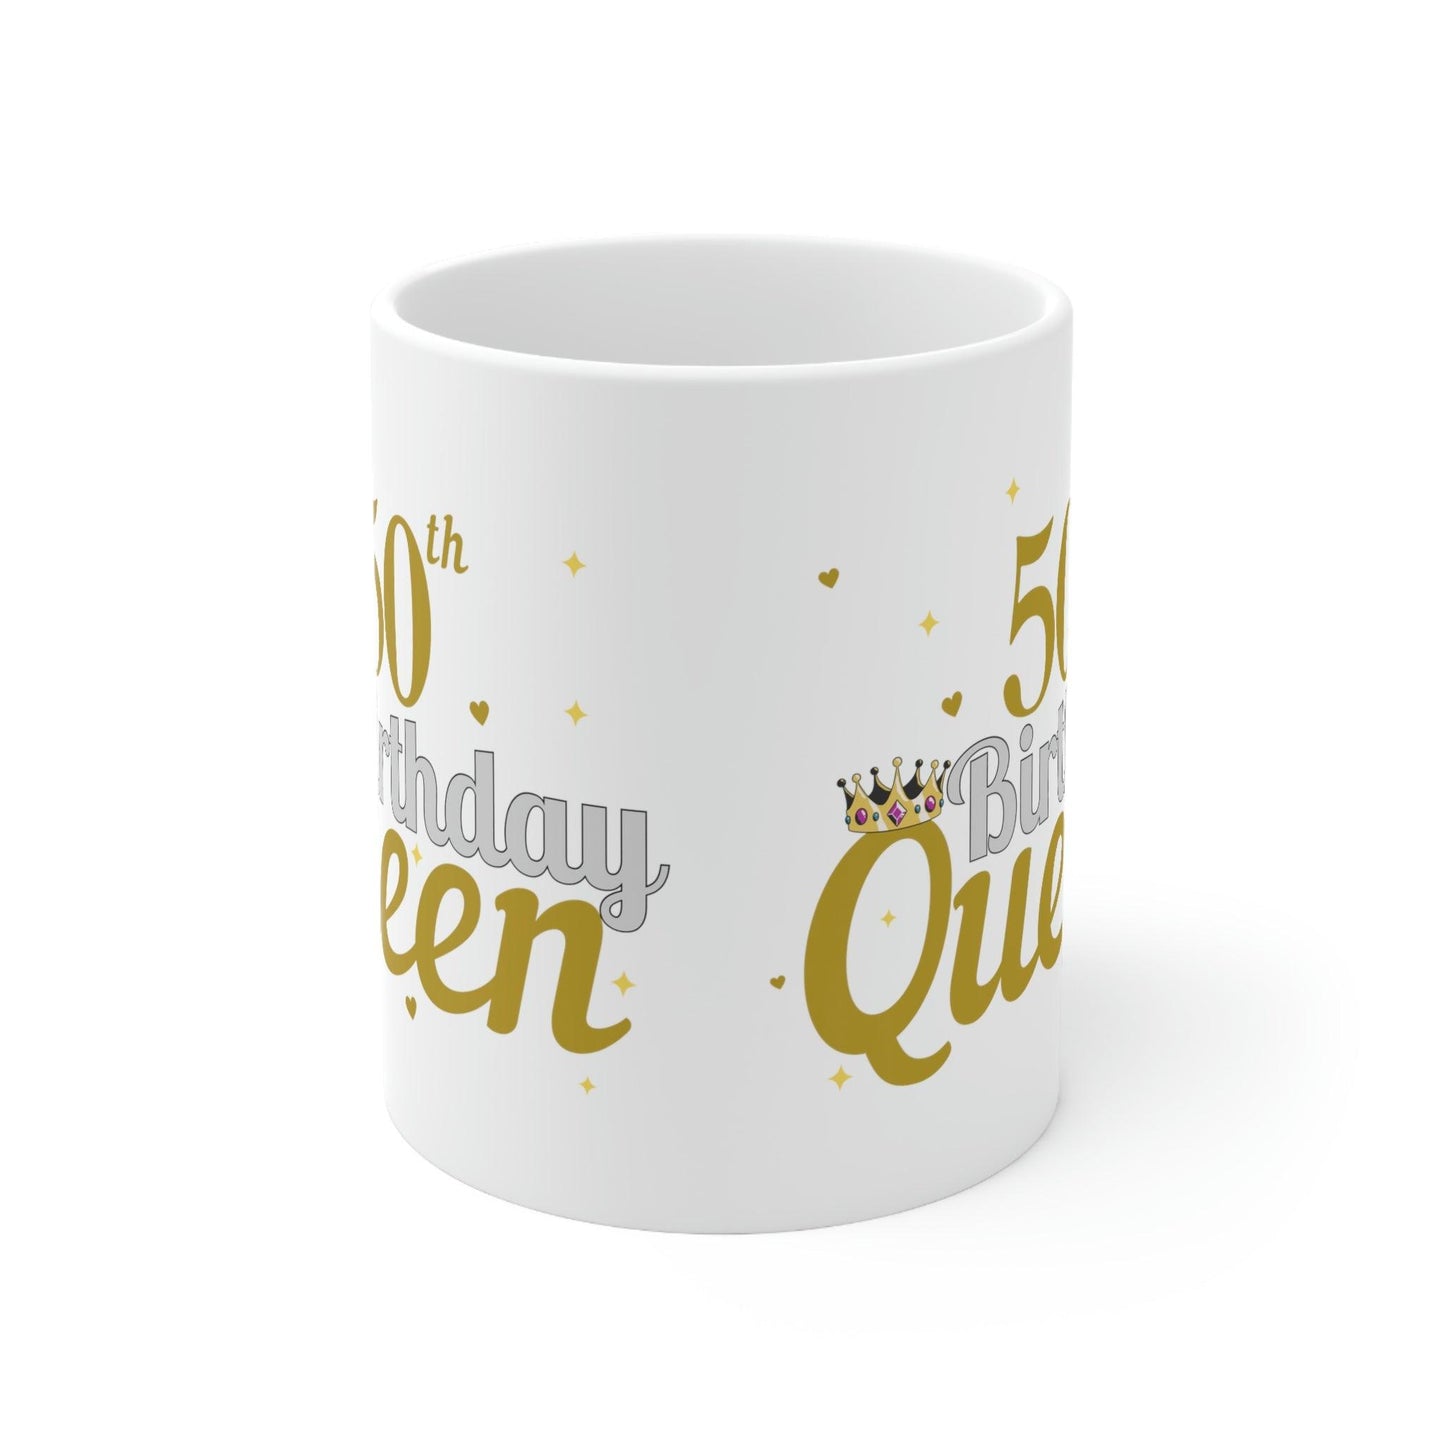 50th birthday queen Mug, gift for mom, Birthday gift for mom, birthday mug, coffee mug for her, hot cocoa mug, gift for coffee lover - Giftsmojo